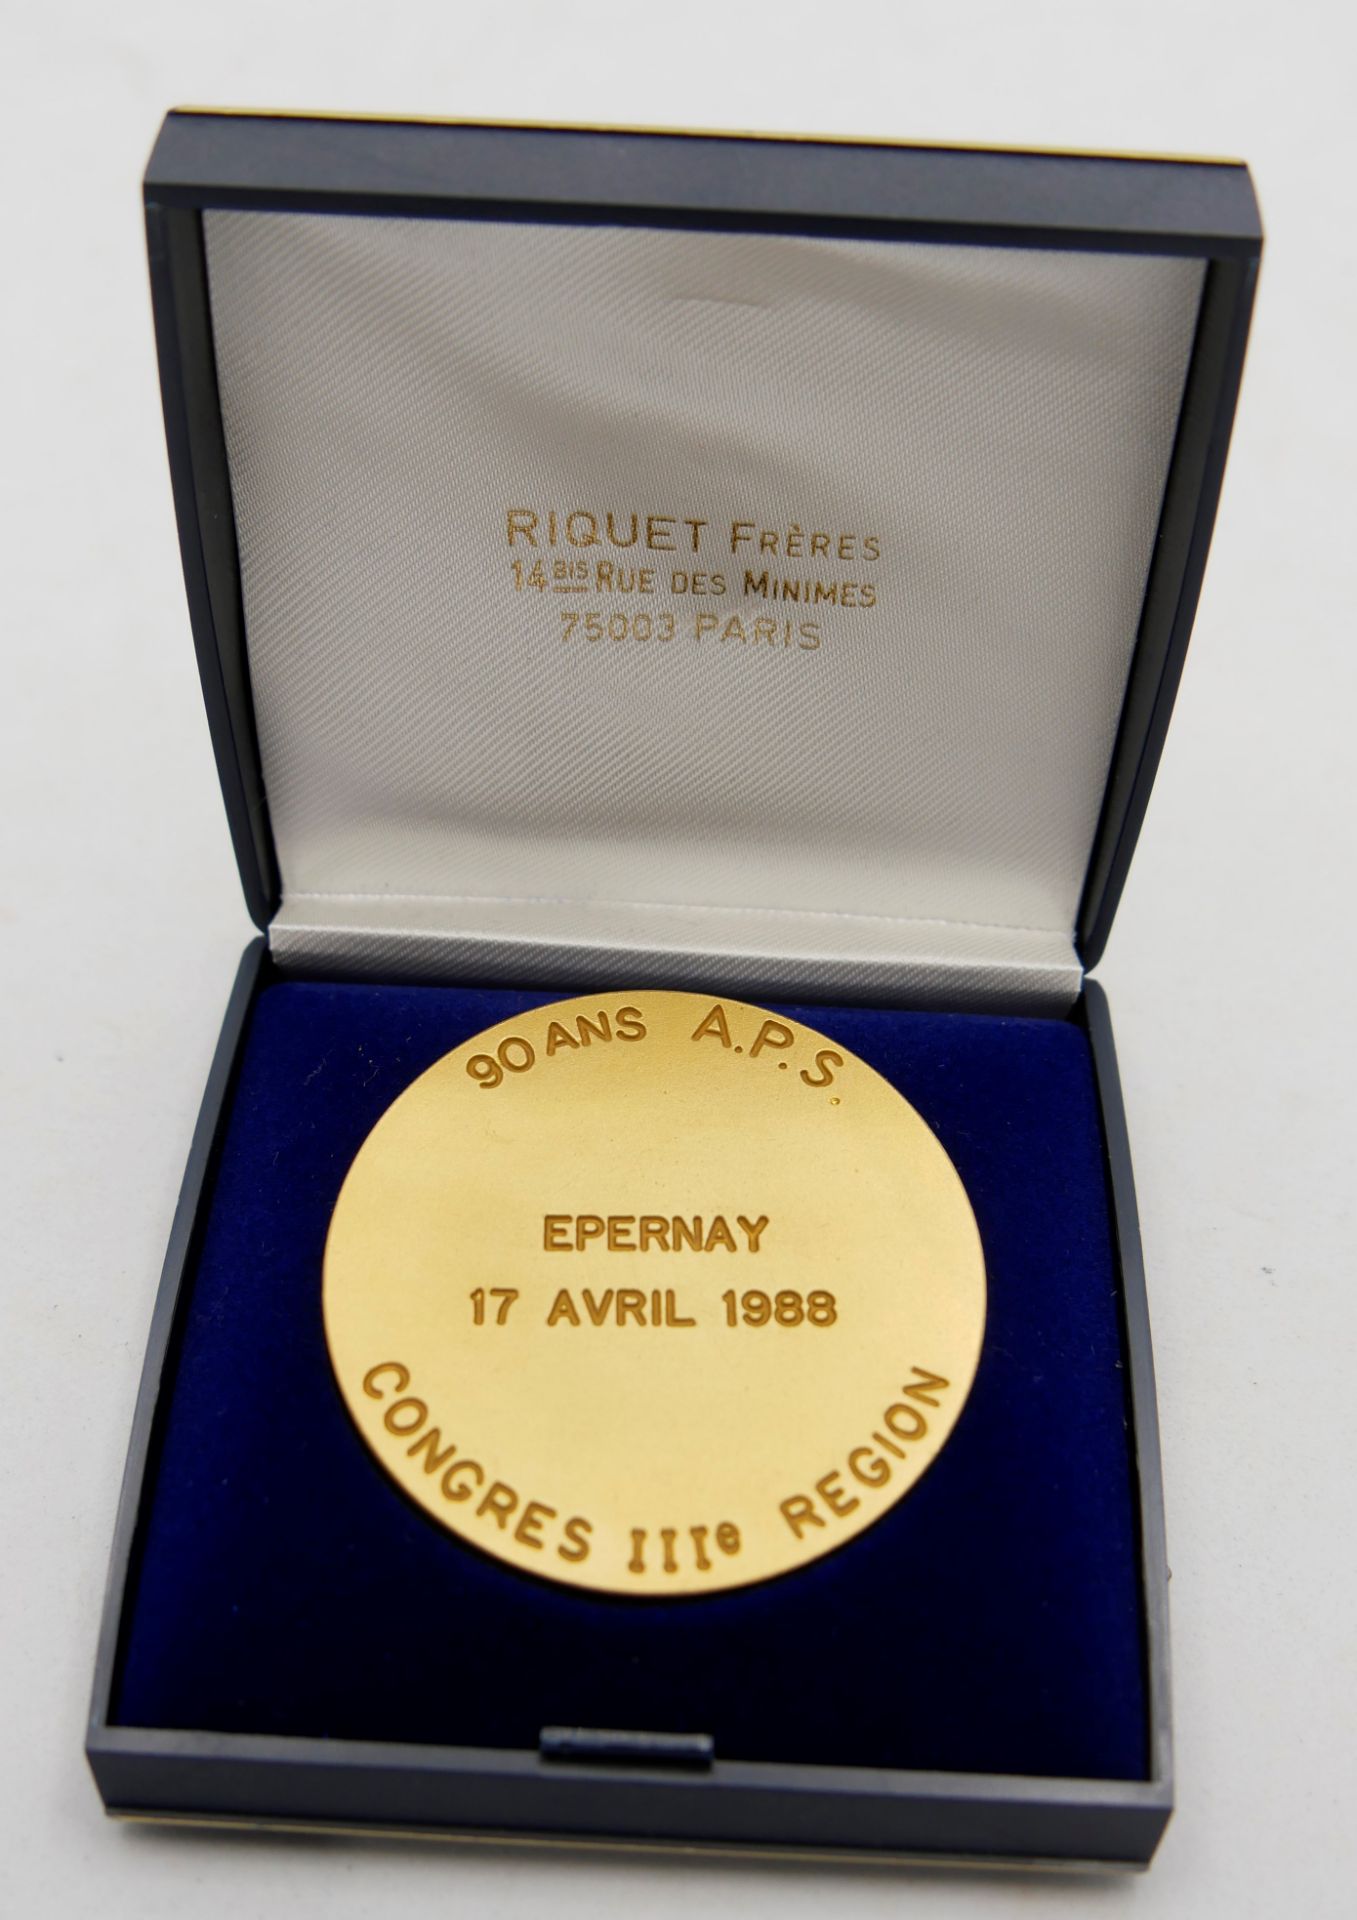 1 Medaille von Riquet Freres Paris für 90 ANS A.P.S. Epernay, 17 Avril 1988 Congress III, Region - Image 3 of 4